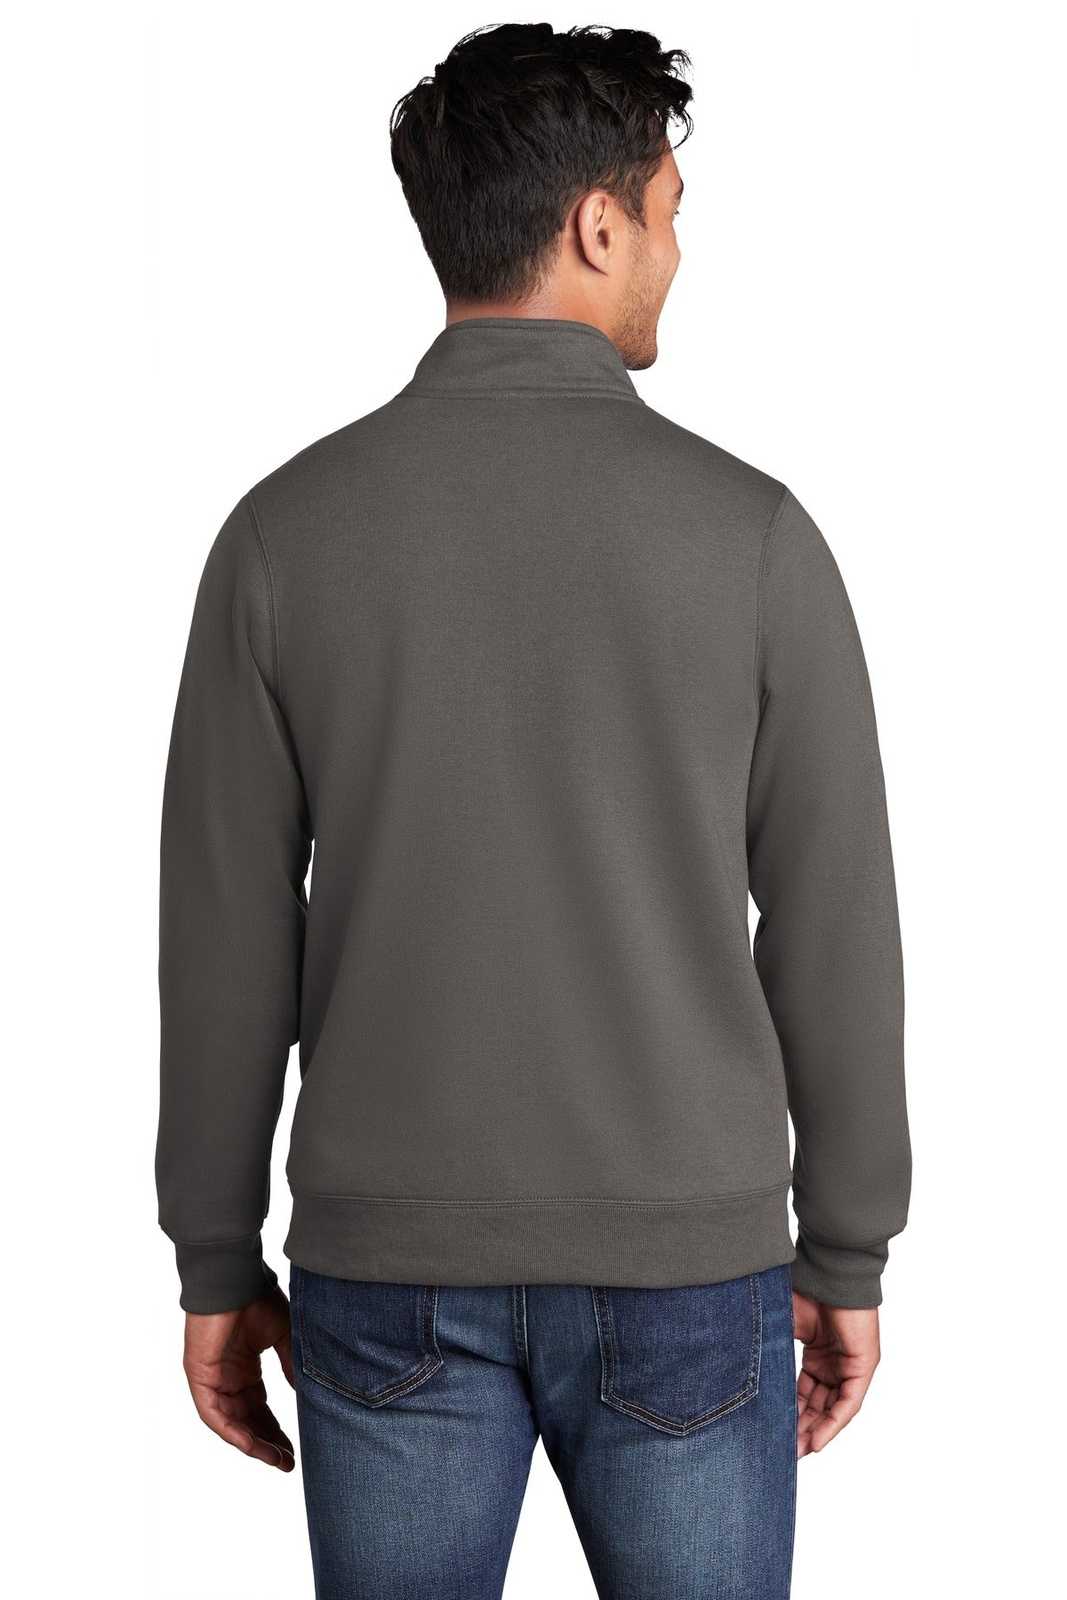 Port & Company PC78FZ Core Fleece Cadet Full-Zip Sweatshirt - Charcoal - HIT a Double - 1